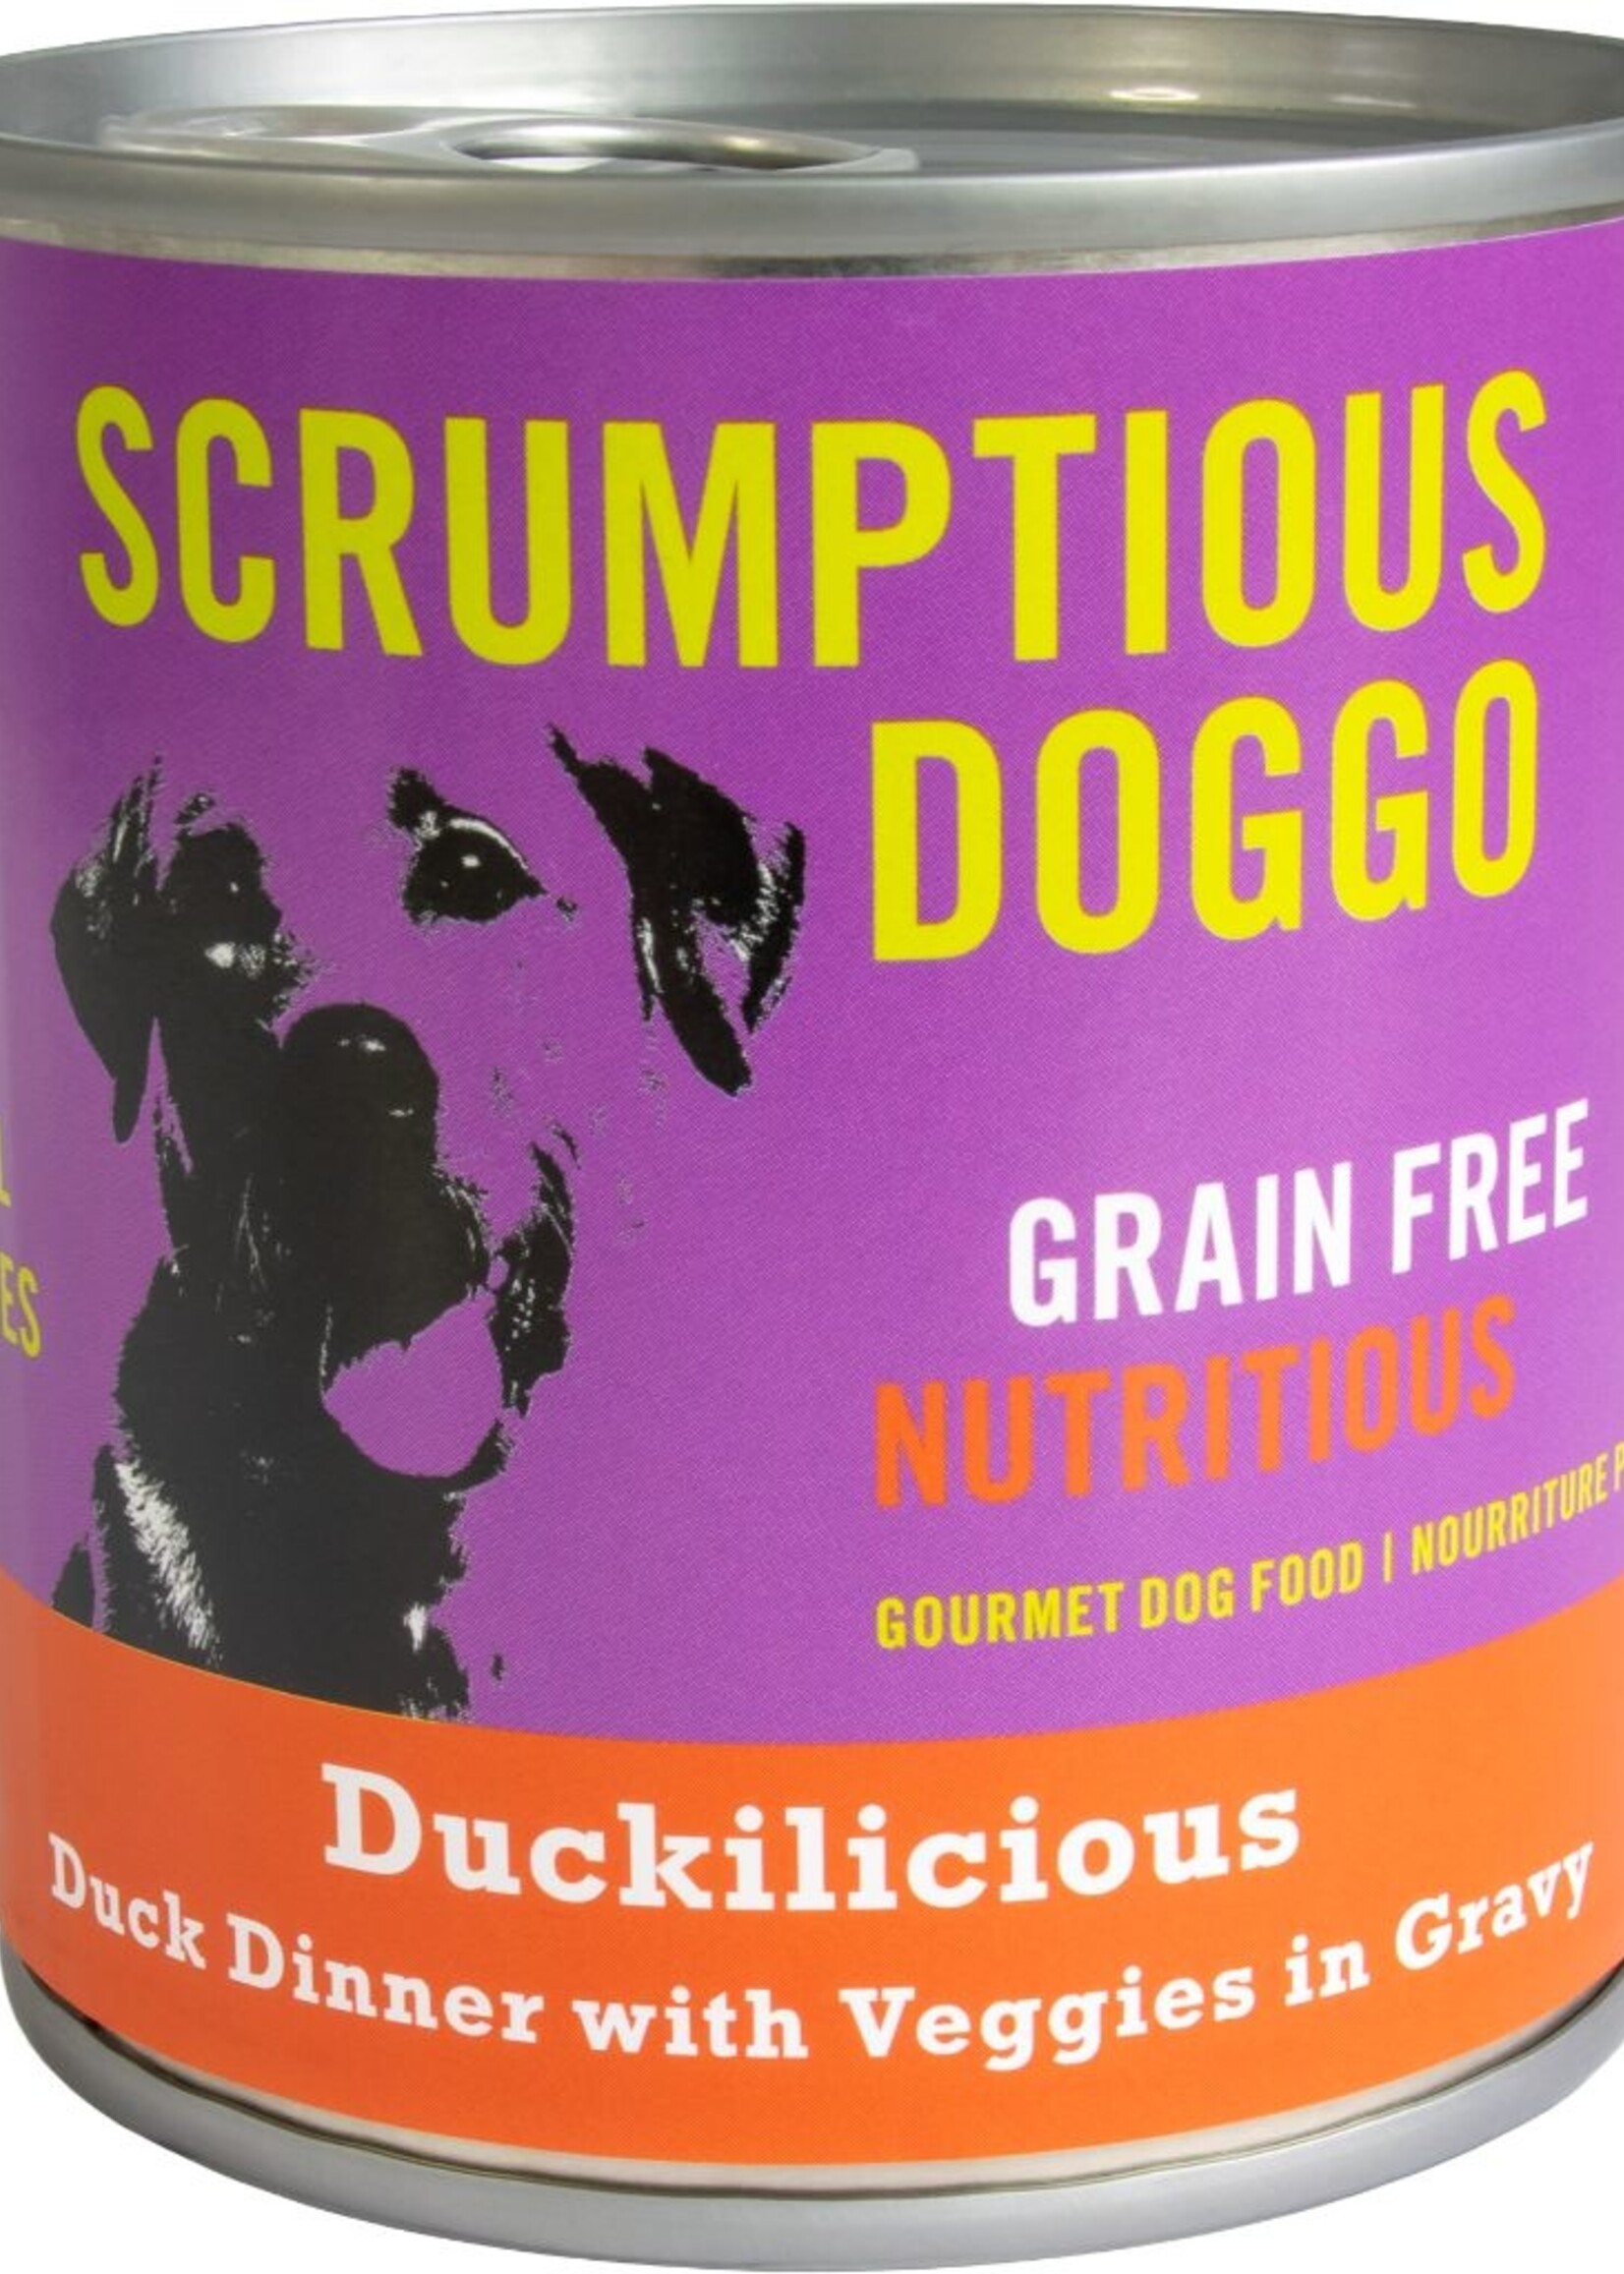 Scrumptious Scrumptious Doggo - Duckalicous Duck Dinner